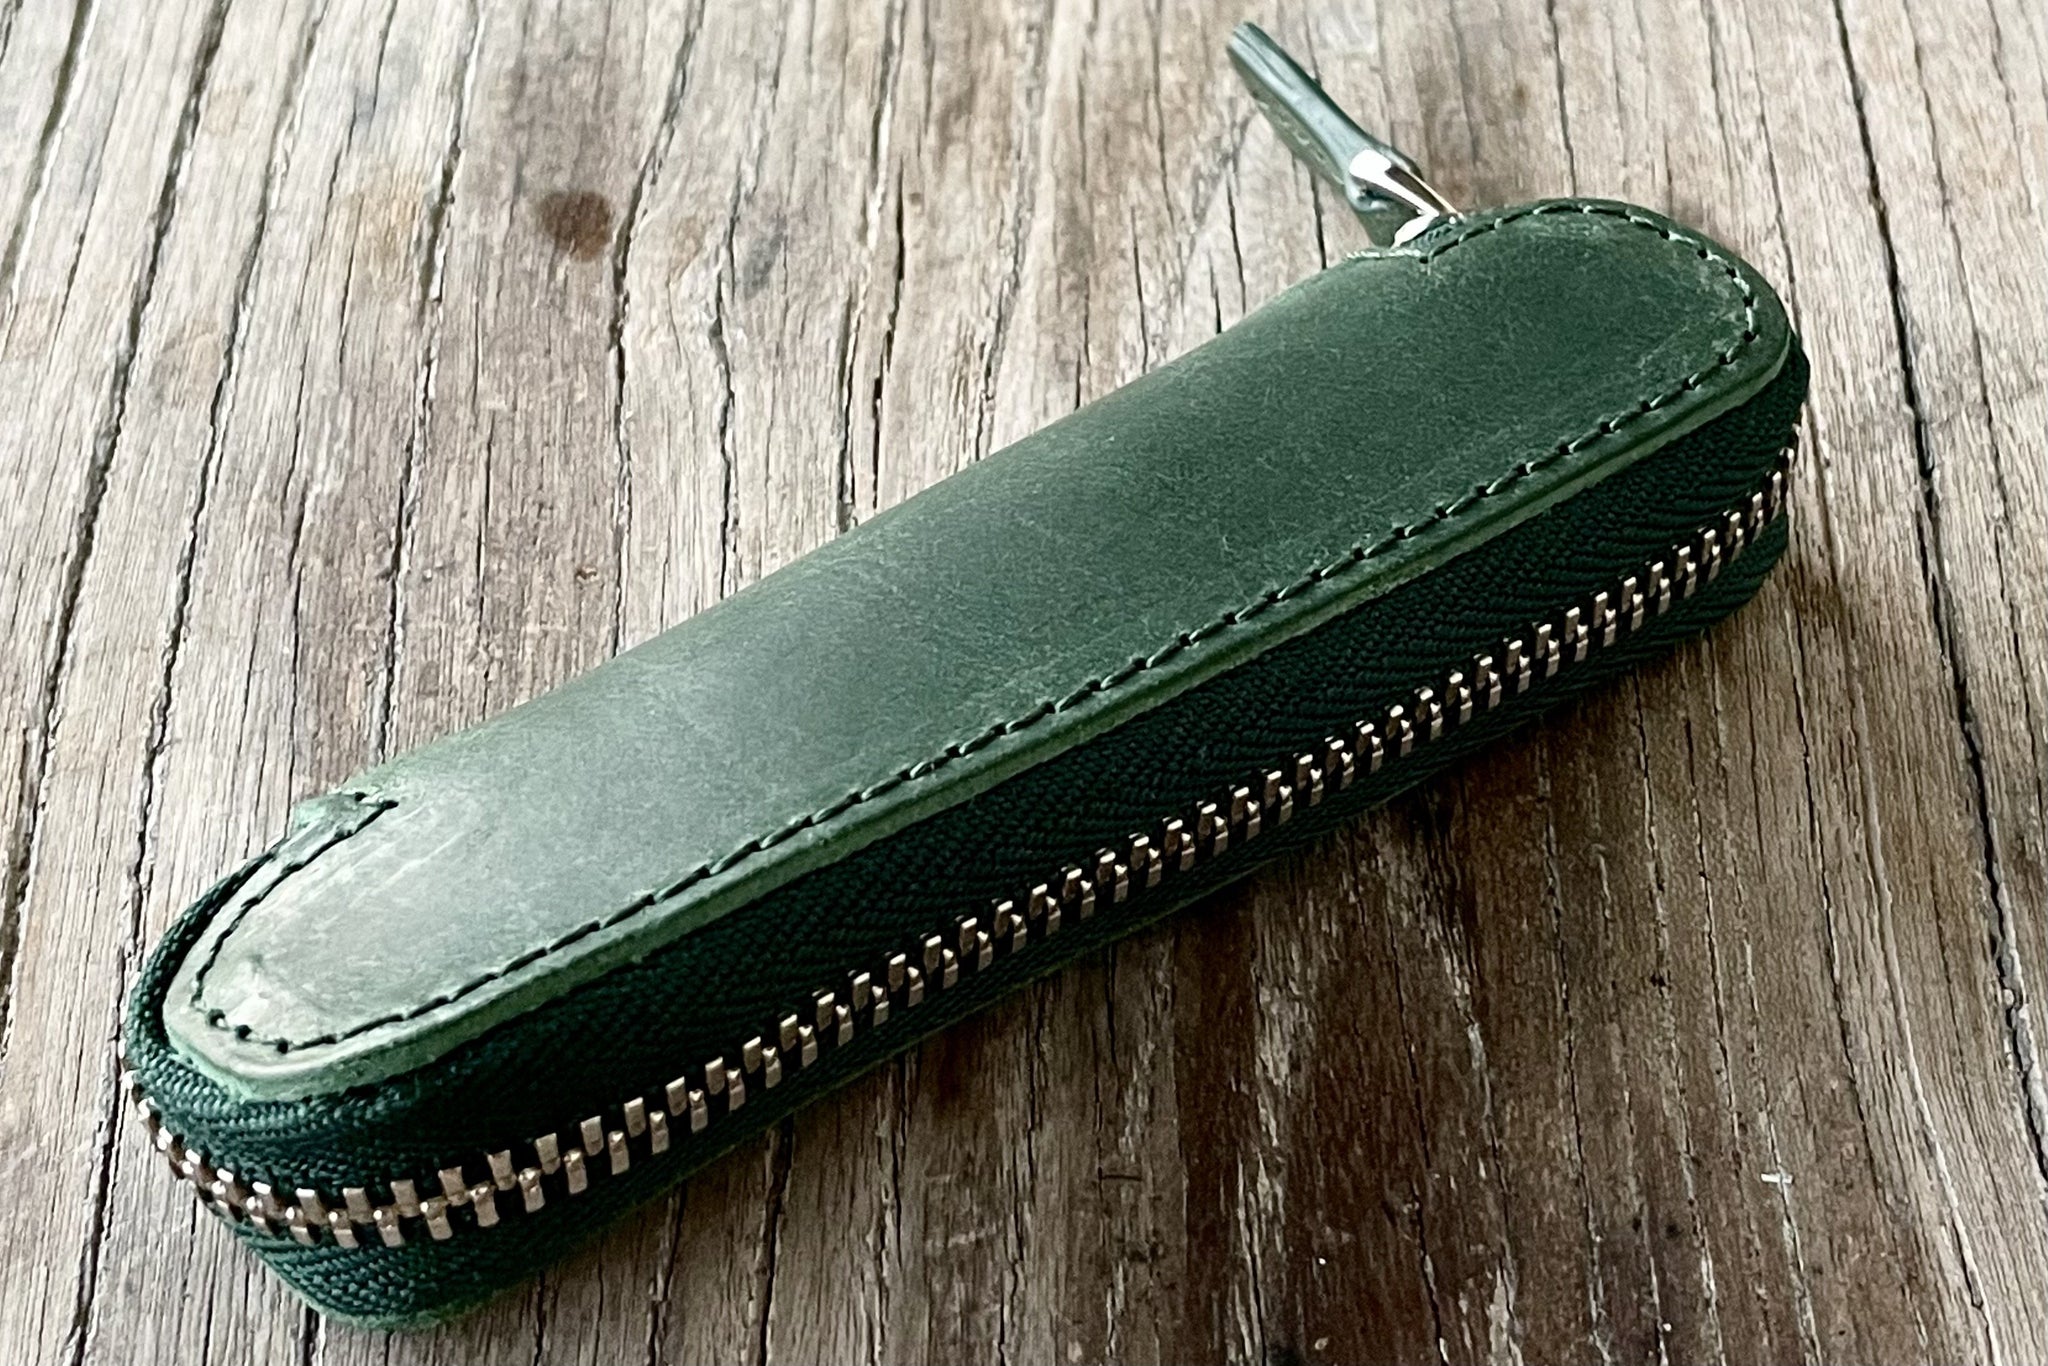  Sluxa Pencil case, Green PU leather pen case,Small